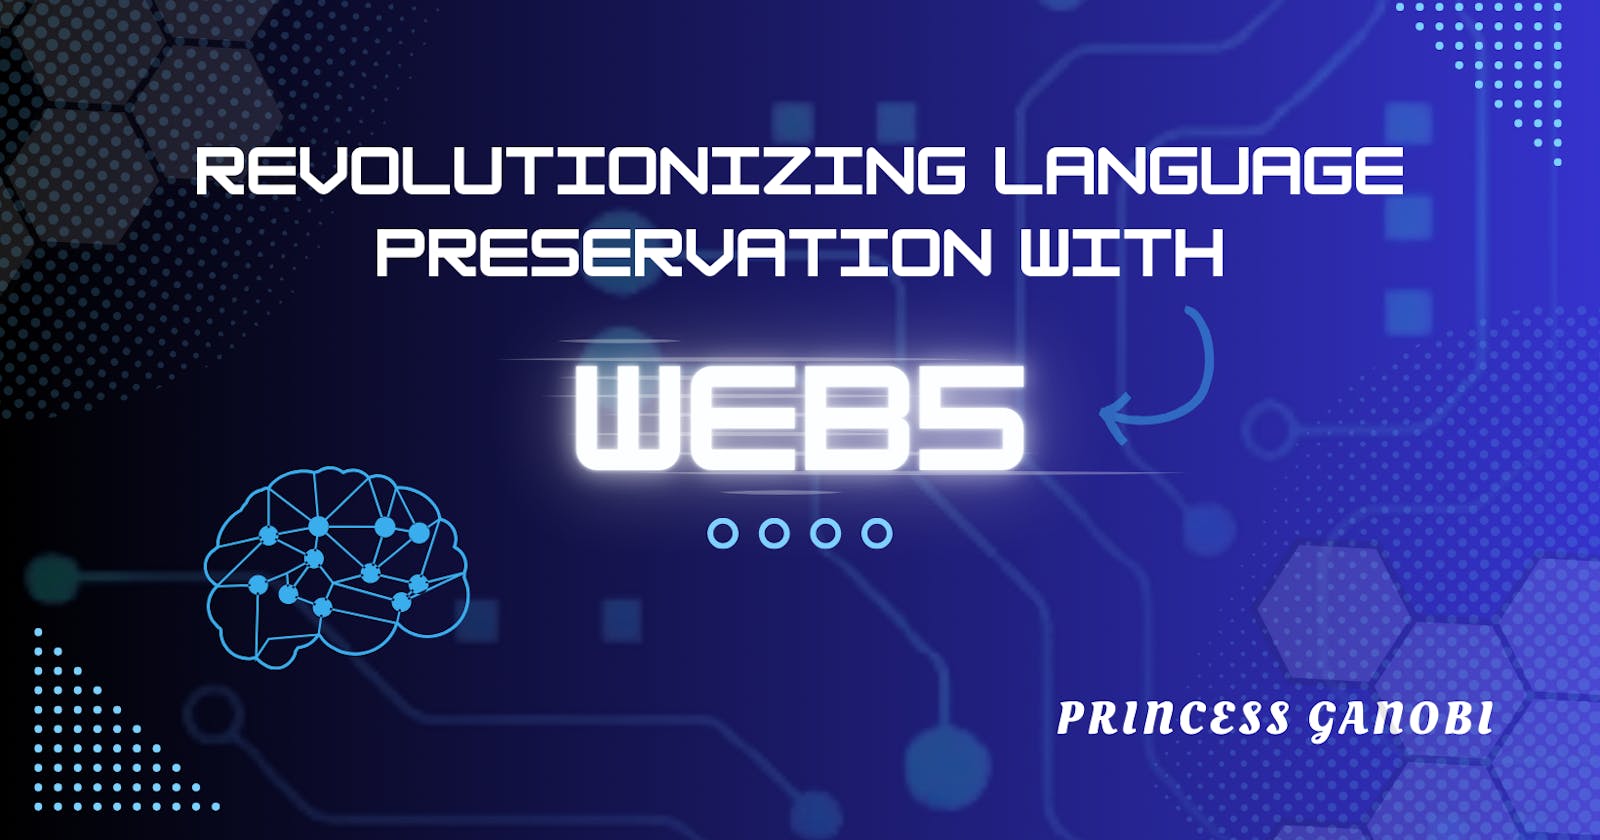 Revolutionizing Language Preservation with Web5